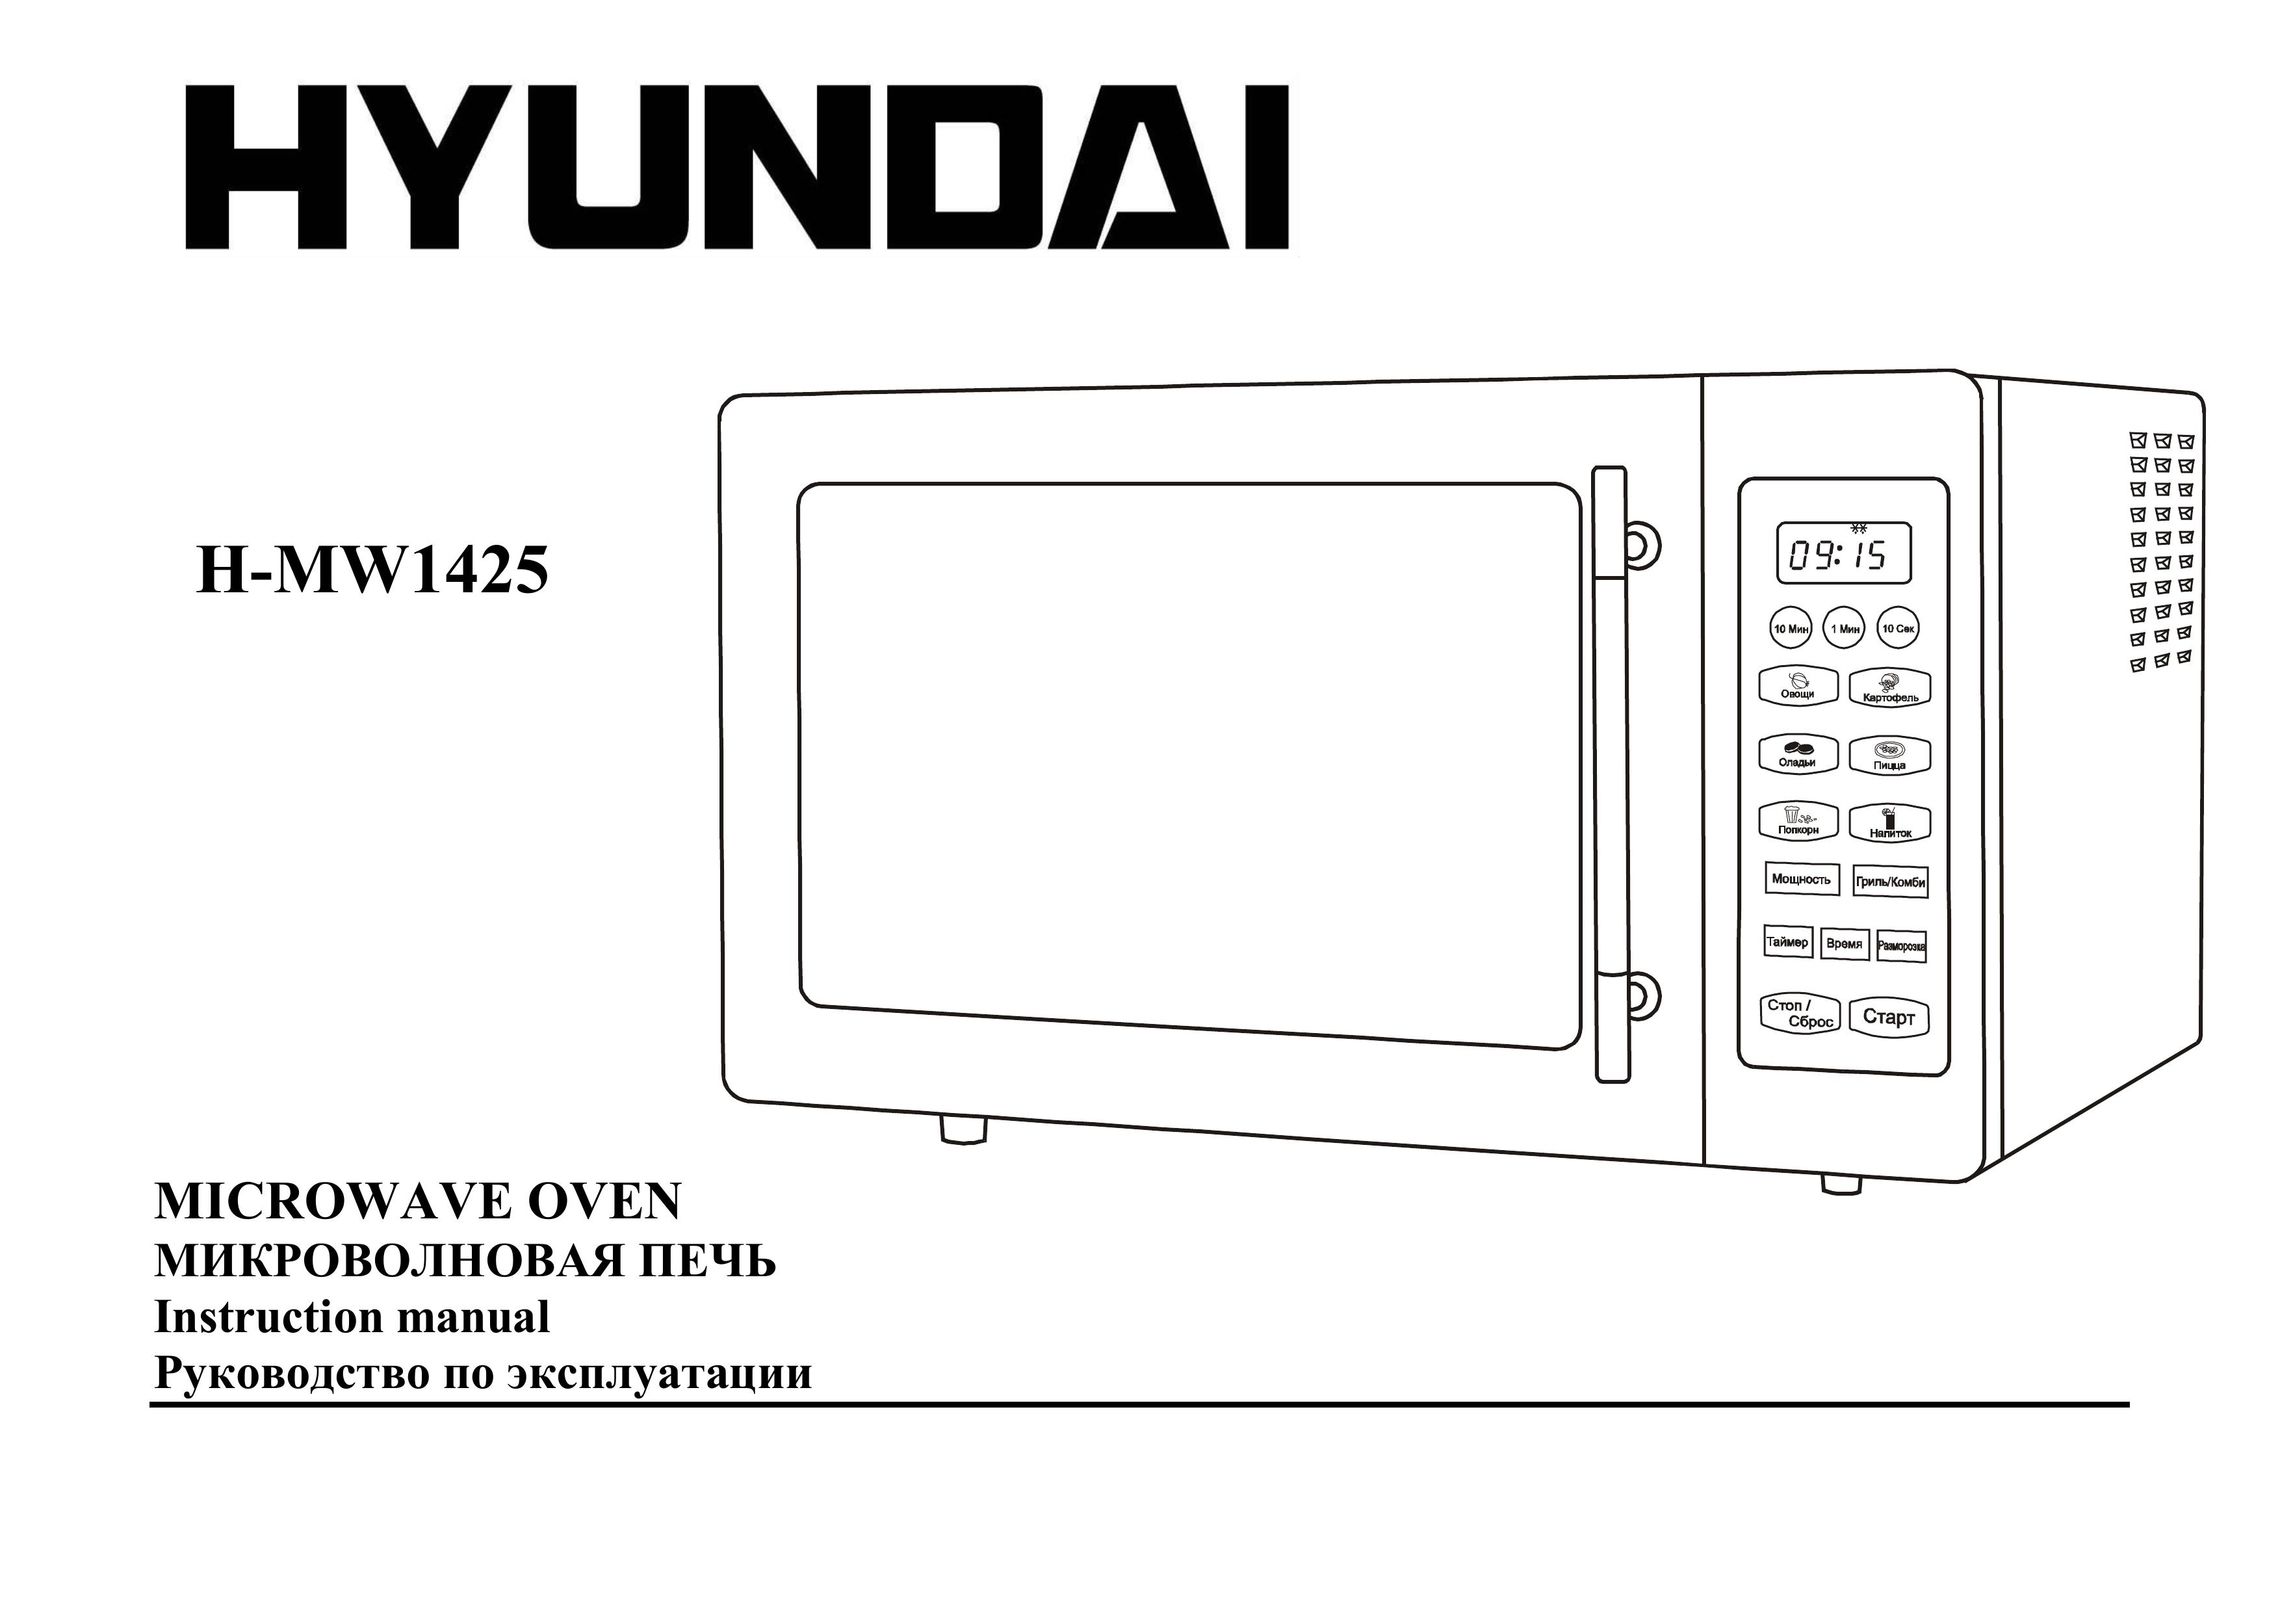 Hyundai H-MW1425 Microwave Oven User Manual